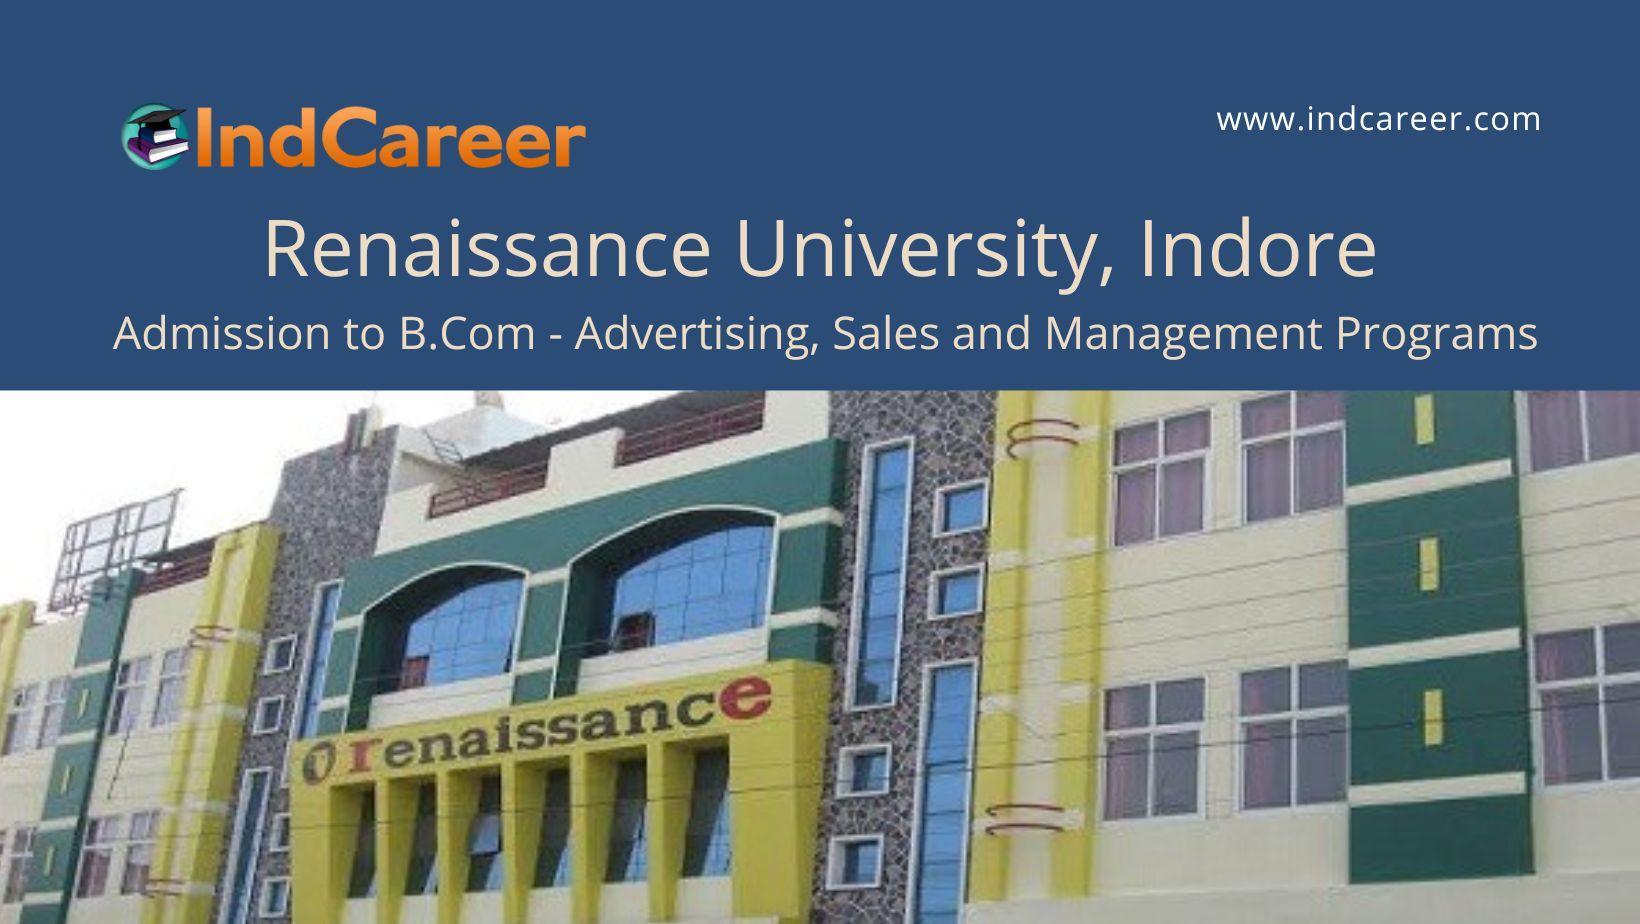 Renaissance University, Indore Advertising, Sales and Management